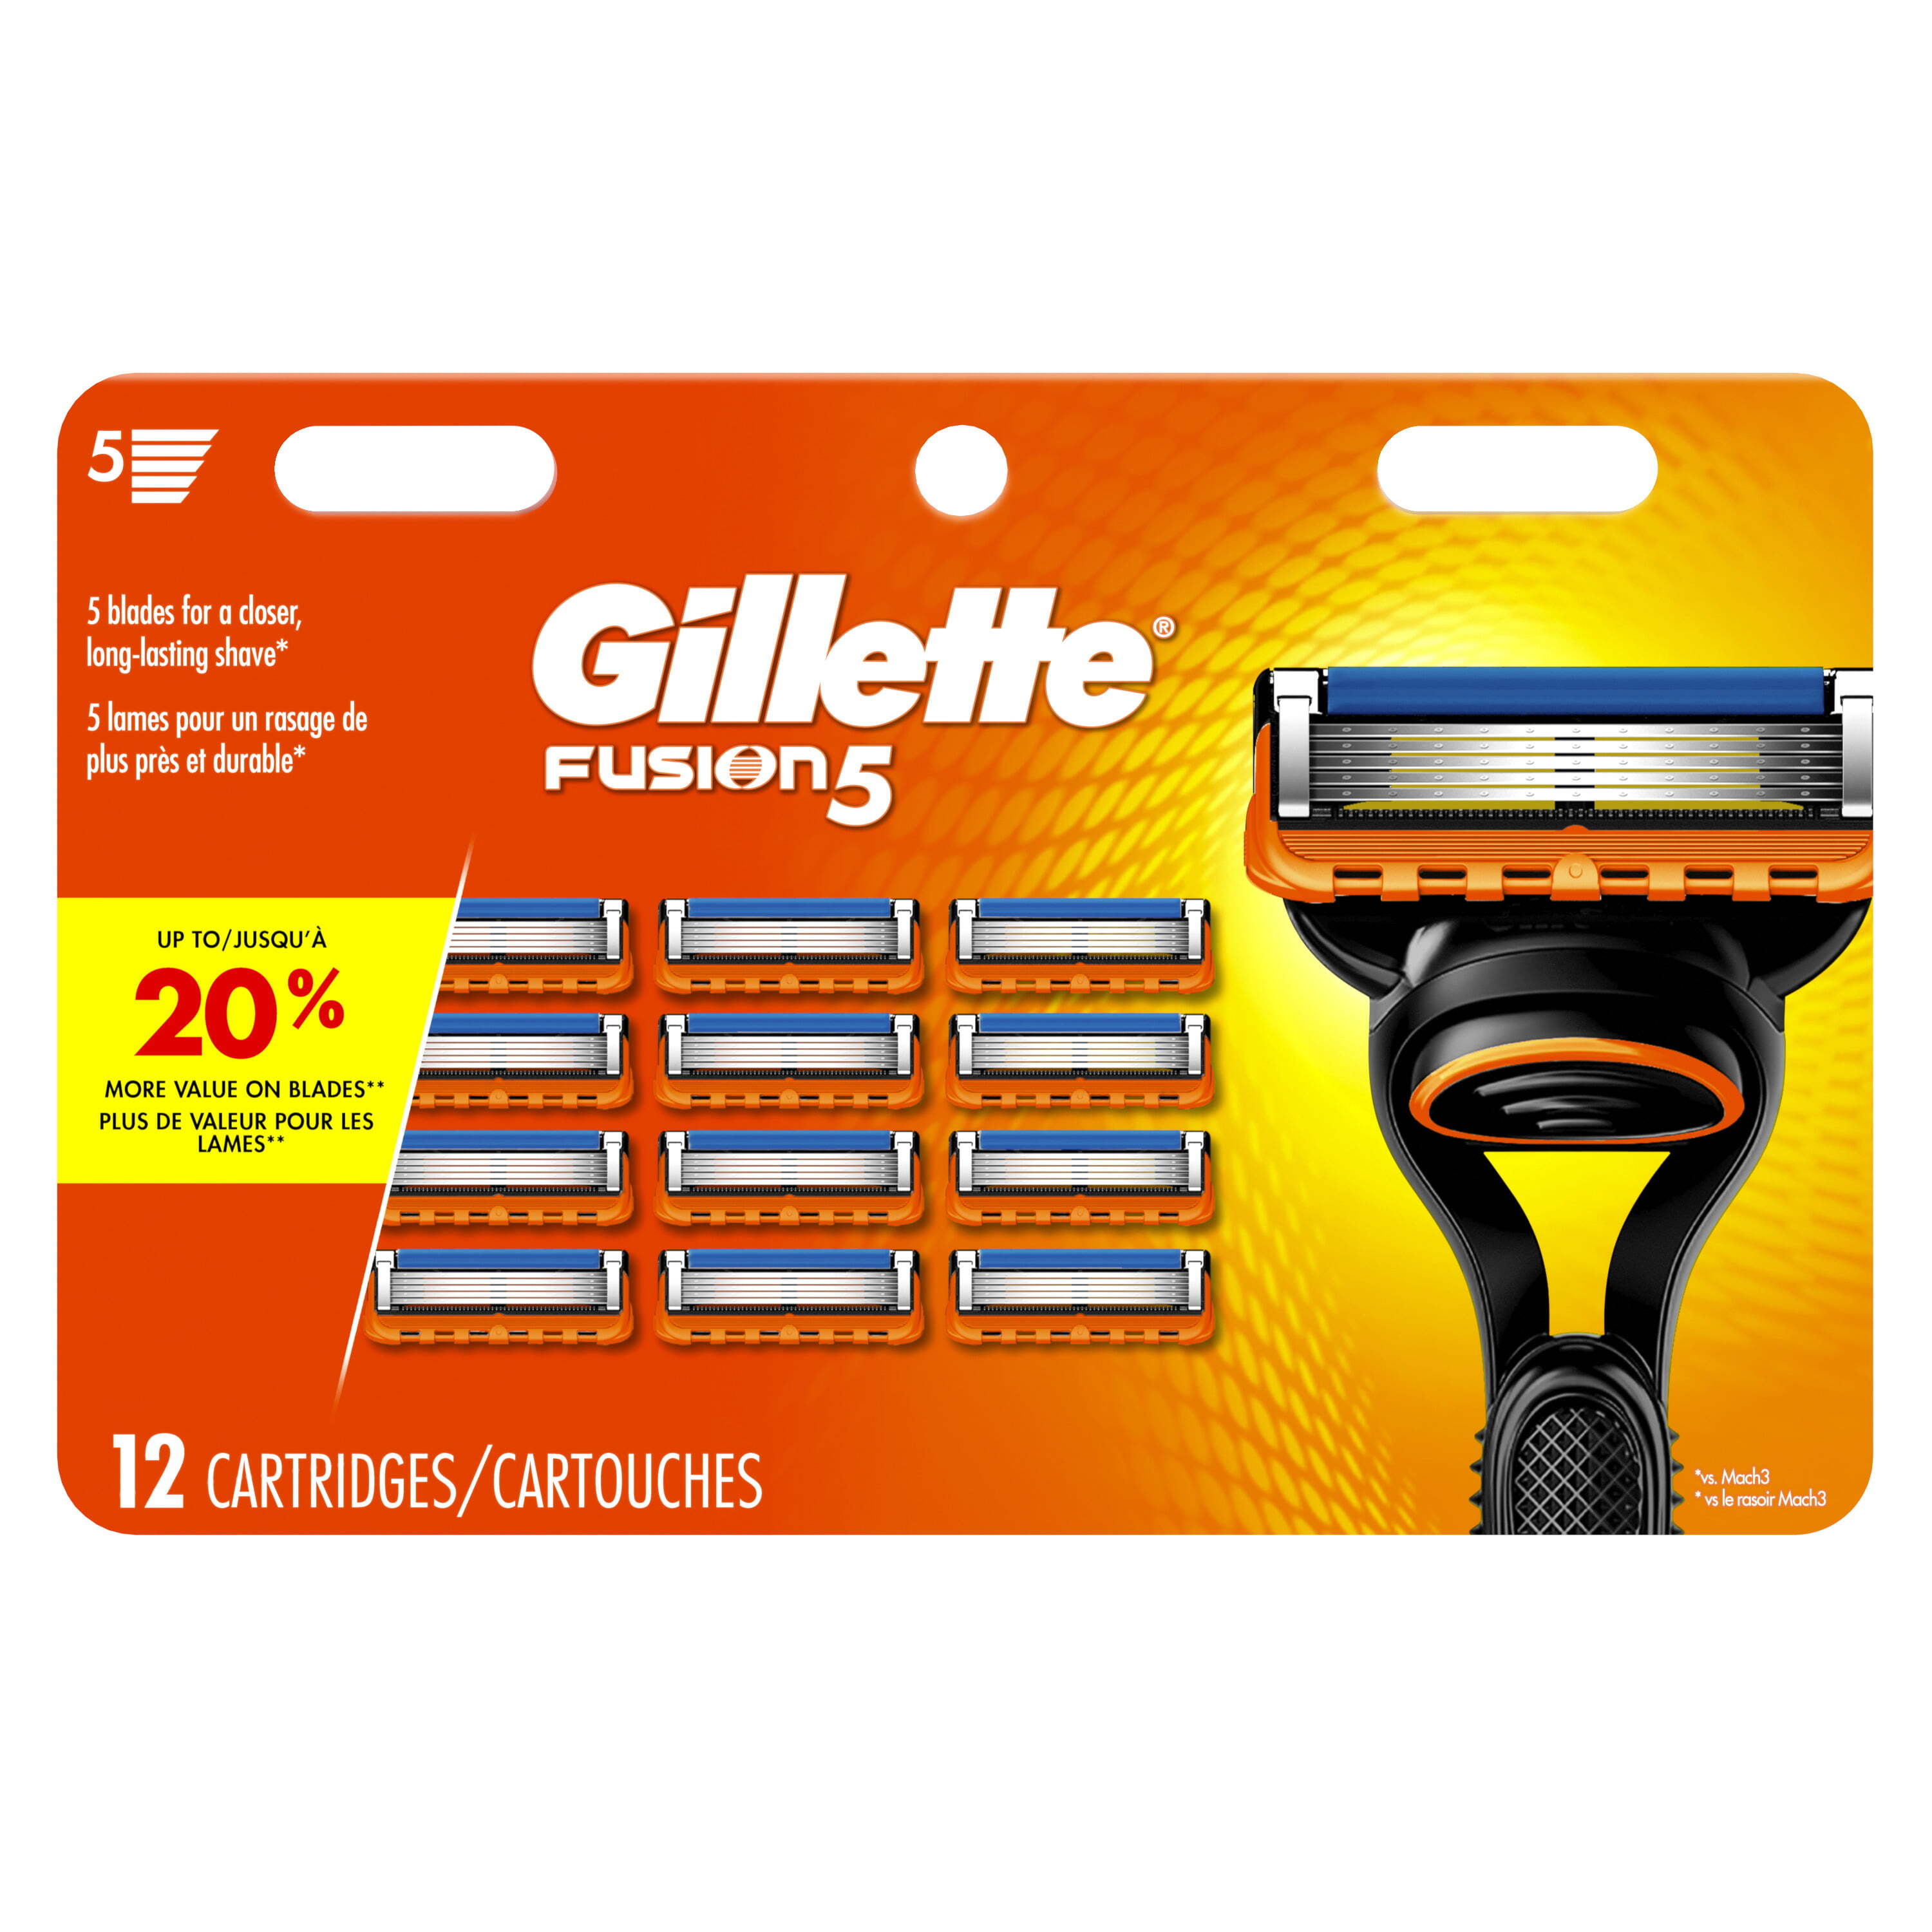 Gillette Fusion5 Men's Razor Blade Refills, 12 Count - image 3 of 12